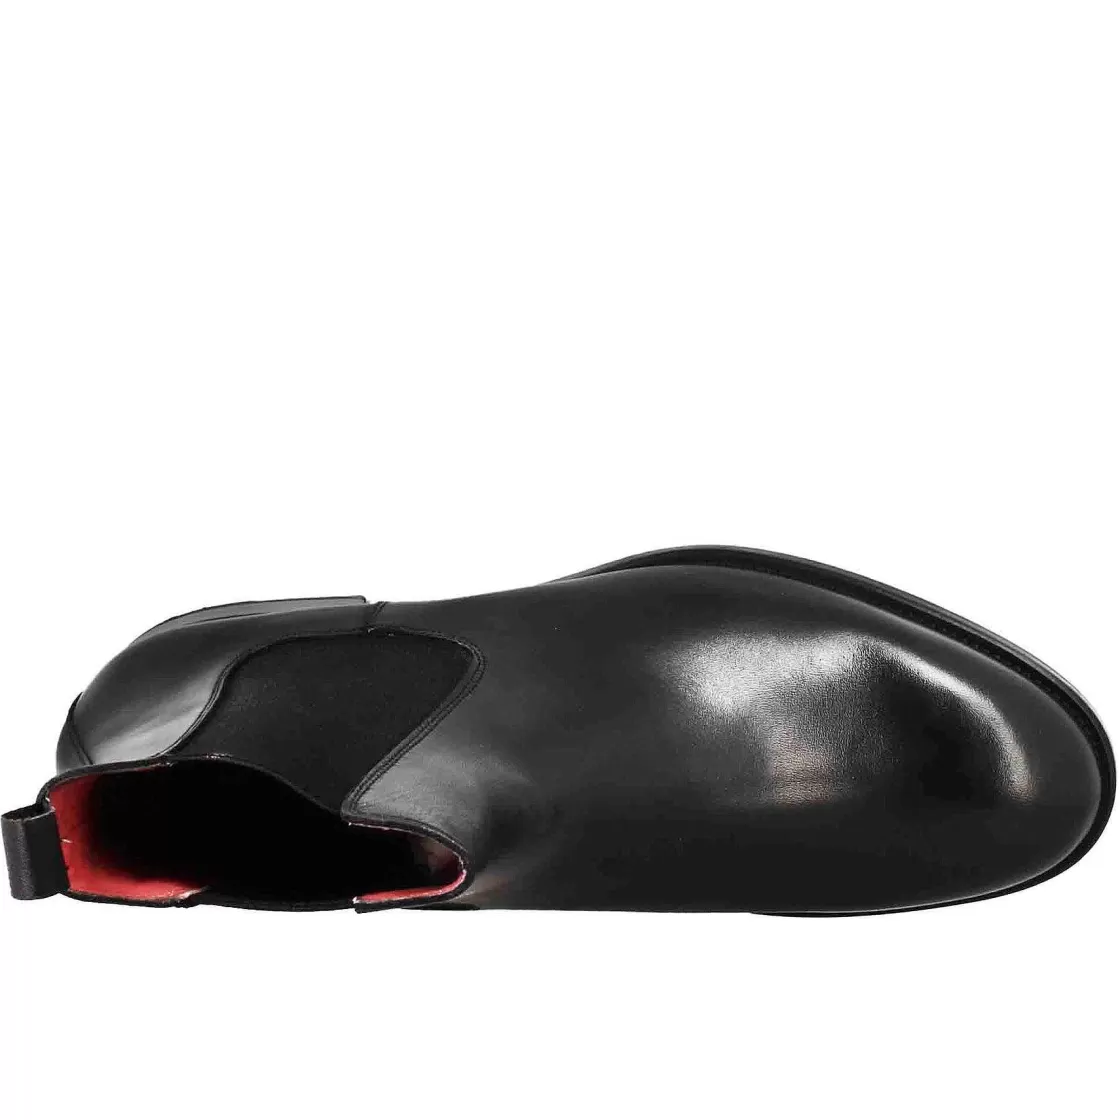 Leonardo Men'S Chelsea Boot In Black Leather With Elastic Best Sale